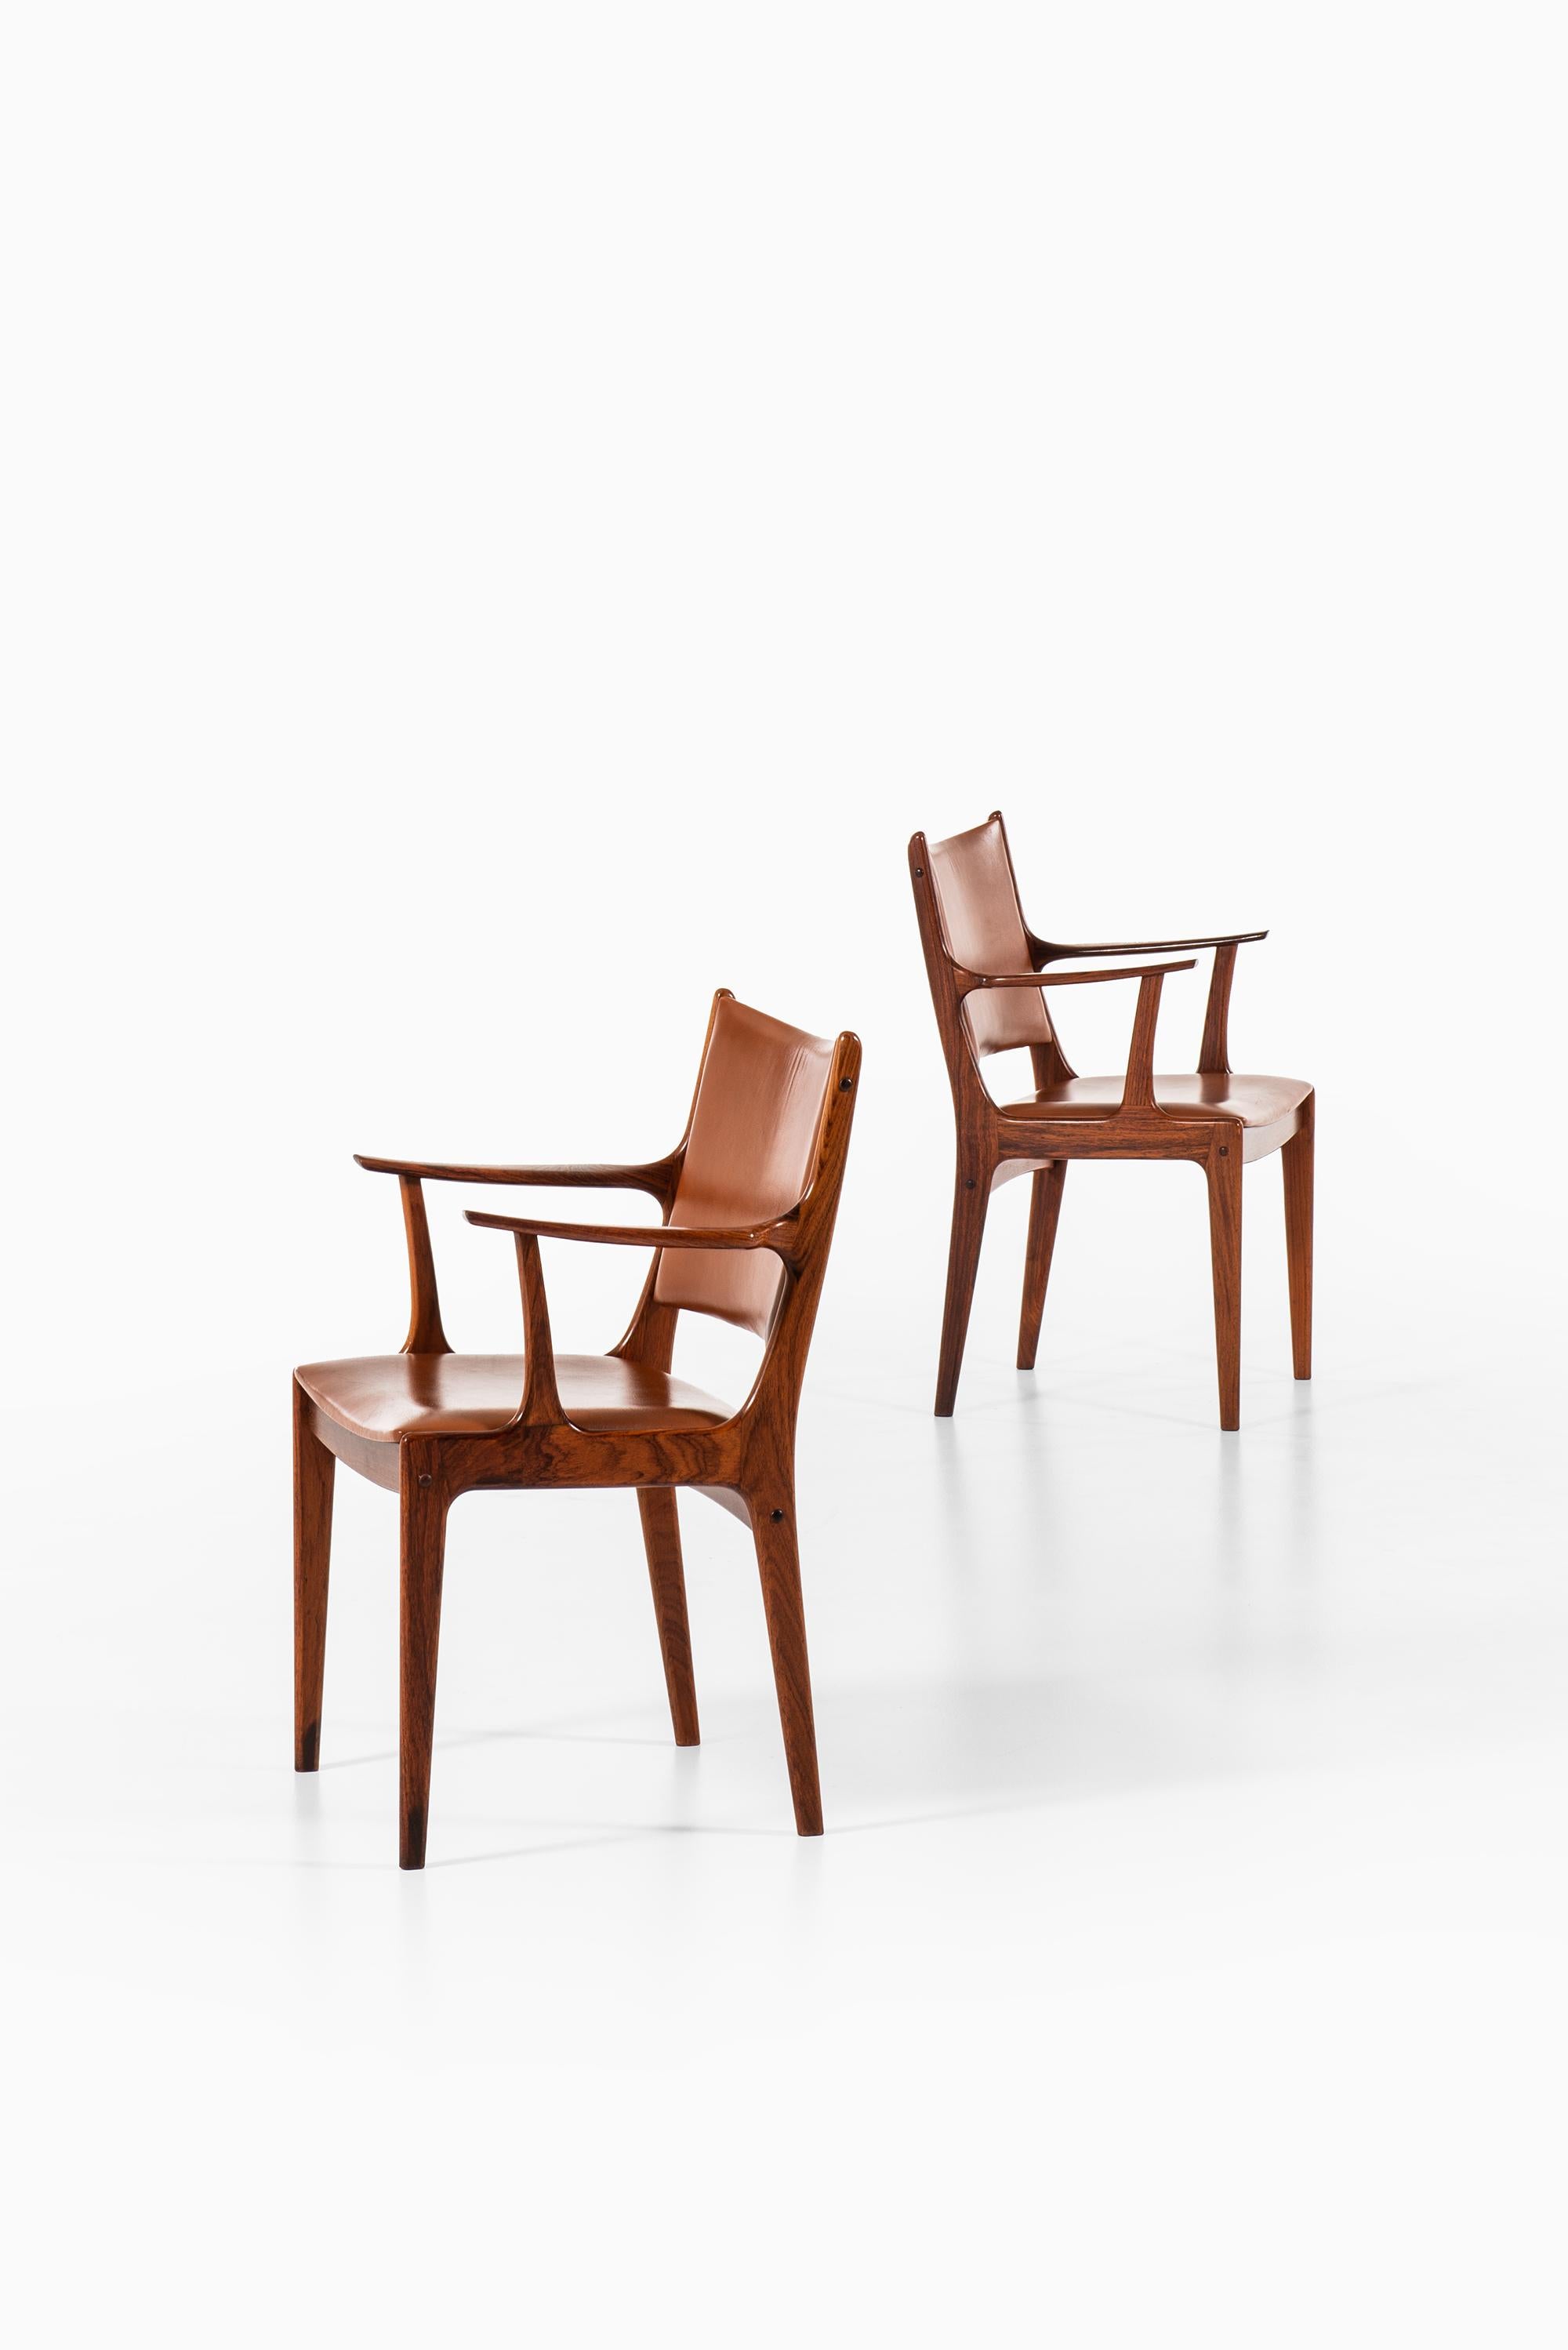 Mid-20th Century Johannes Andersen Dining Chairs / Armchairs by Uldum Møbelfabrik in Denmark